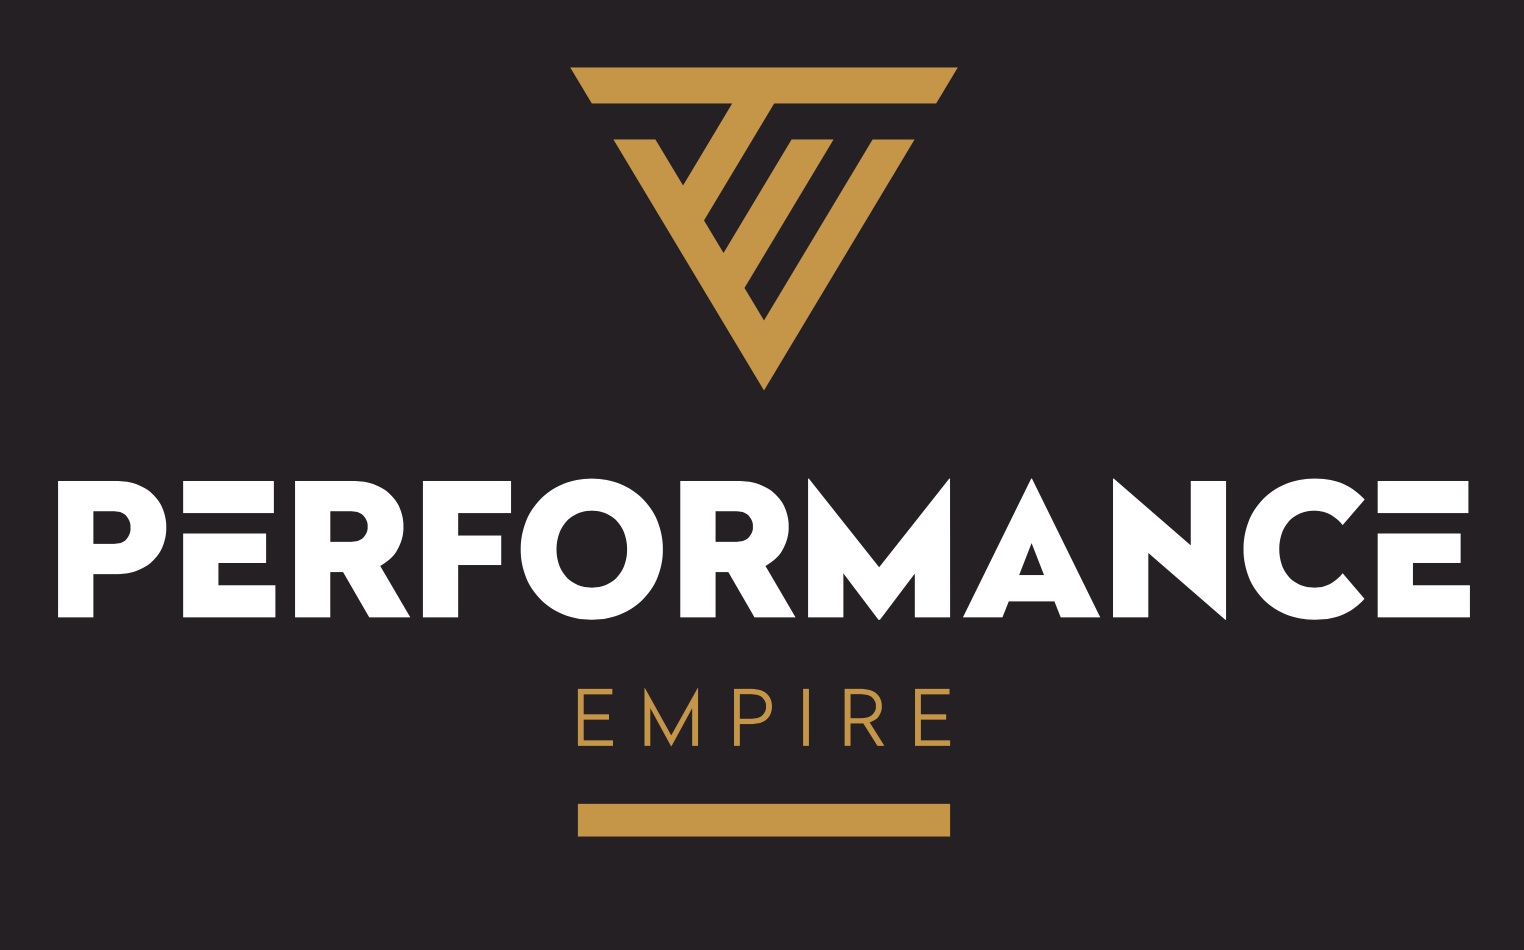 Performance Empire